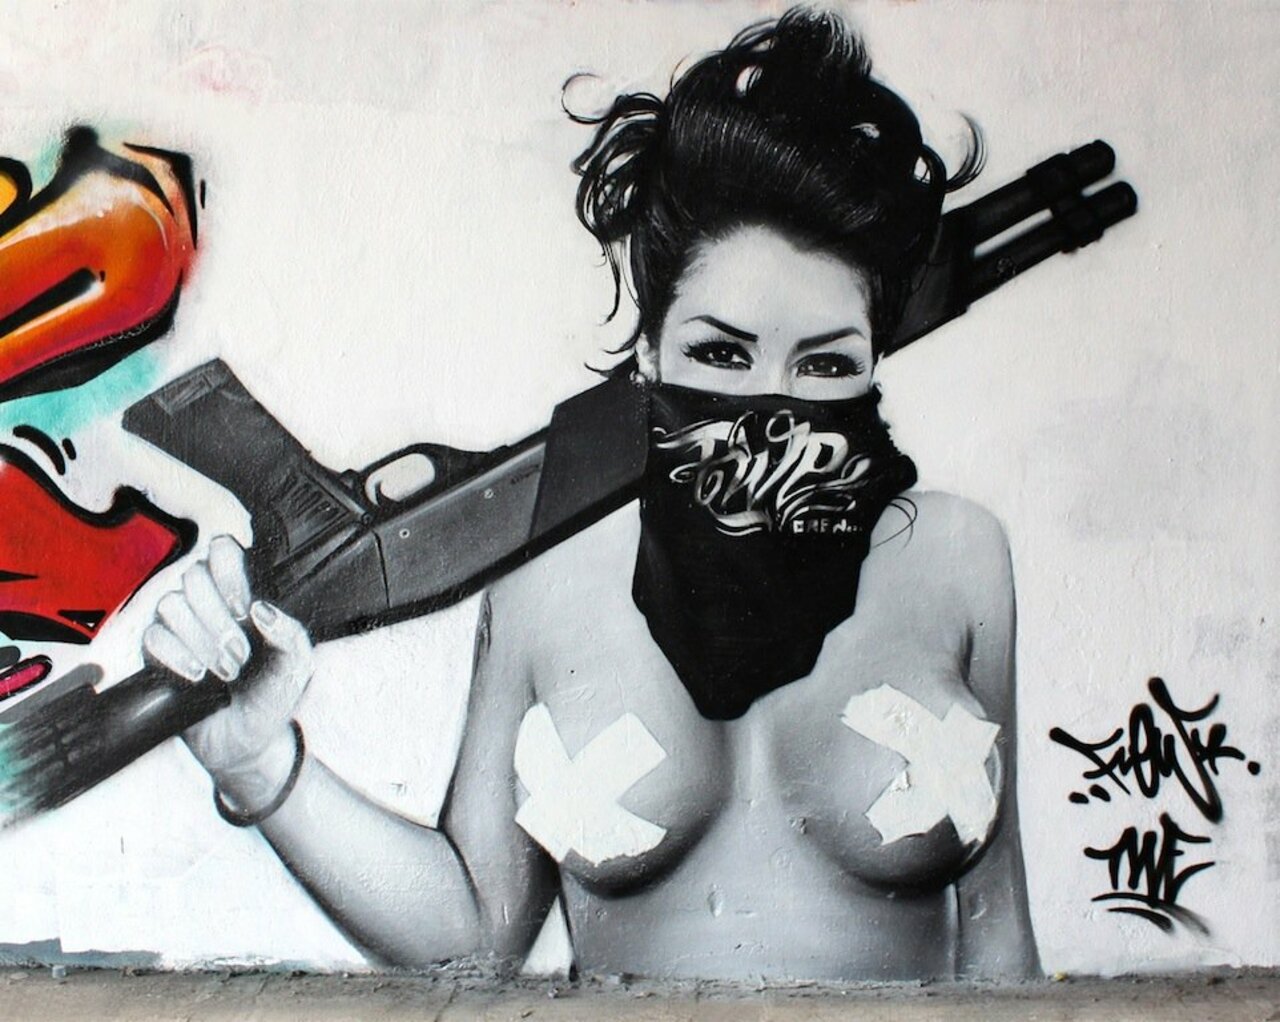 #Streetart #urbanart #graffiti de l'artiste Flow (TWE crew) https://t.co/UTtY0SYel7